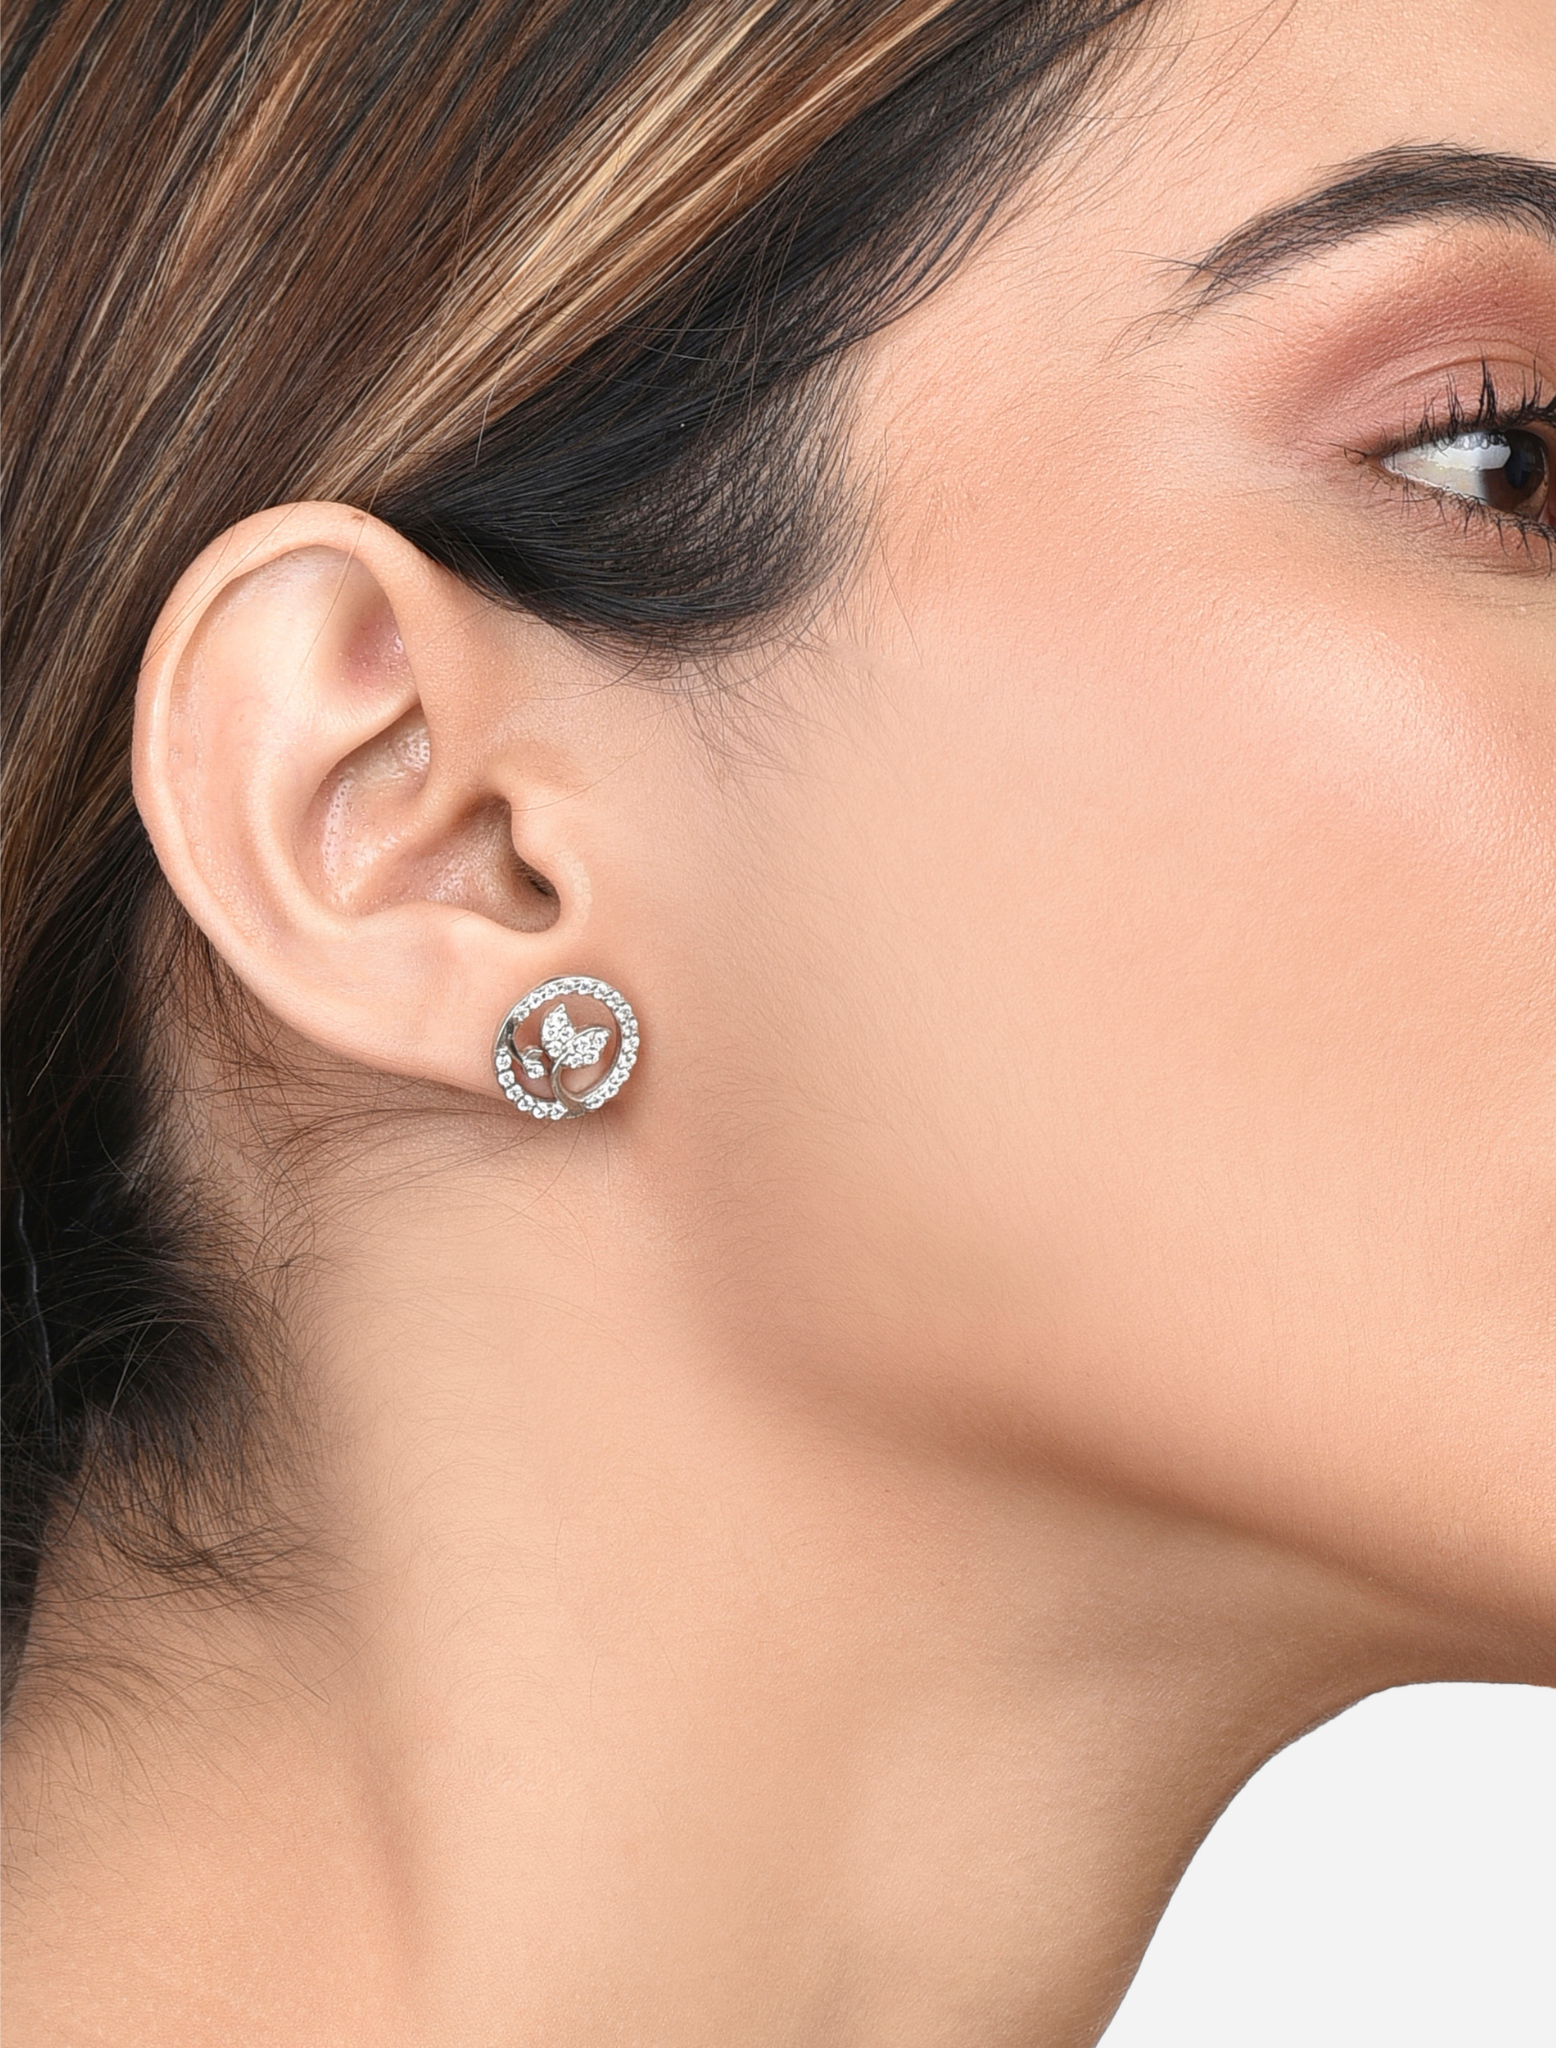 Buy Stylish Stud Earrings Online in India - MirrorWhite 925 Silver Earrings